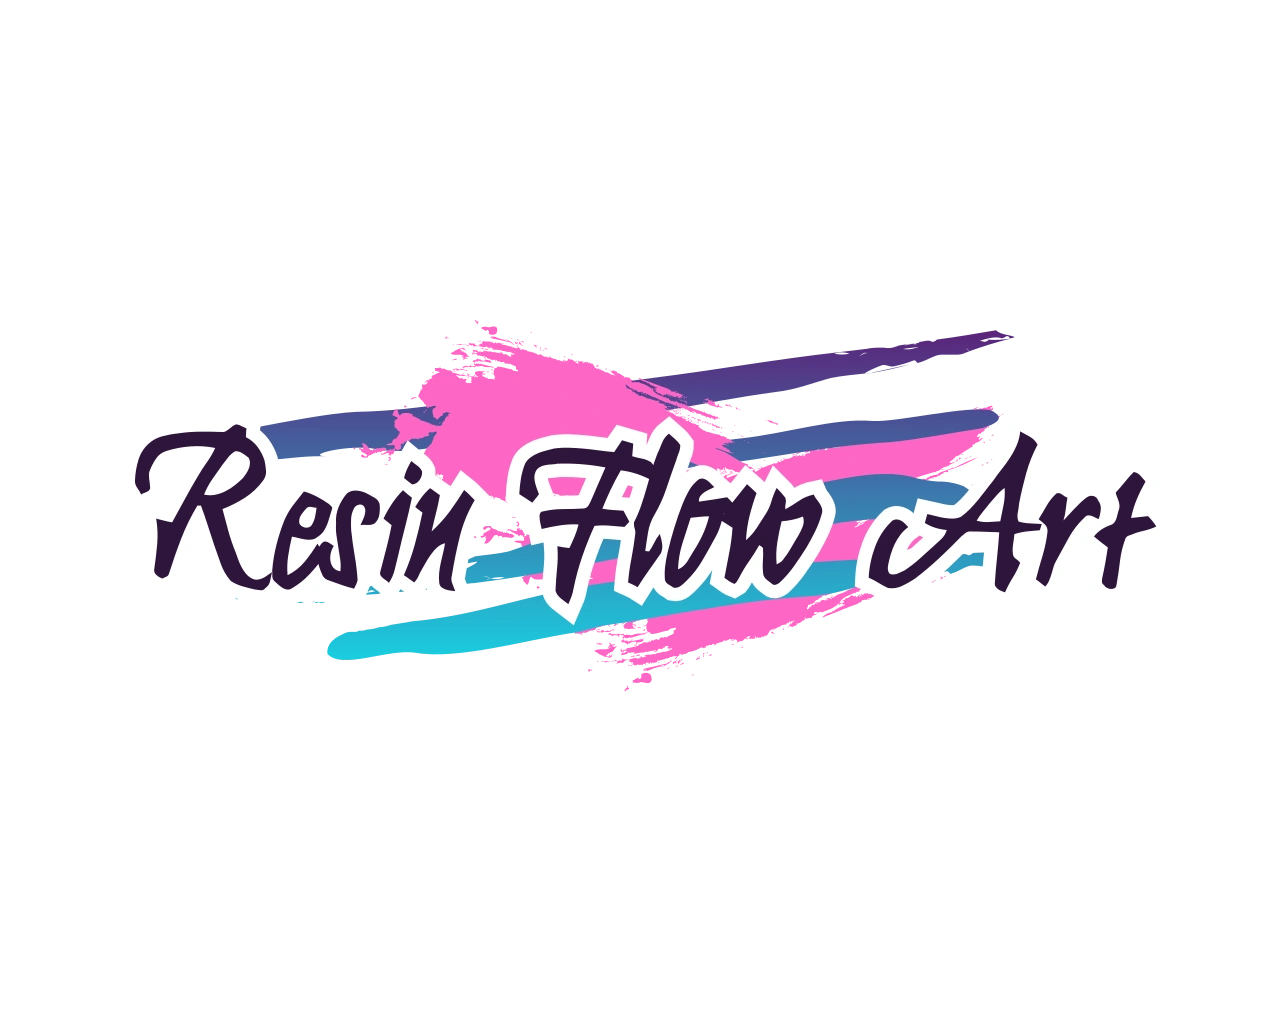 Resin Flow Art - Resin, Epoxy, Resin Pour Art Class, Resin